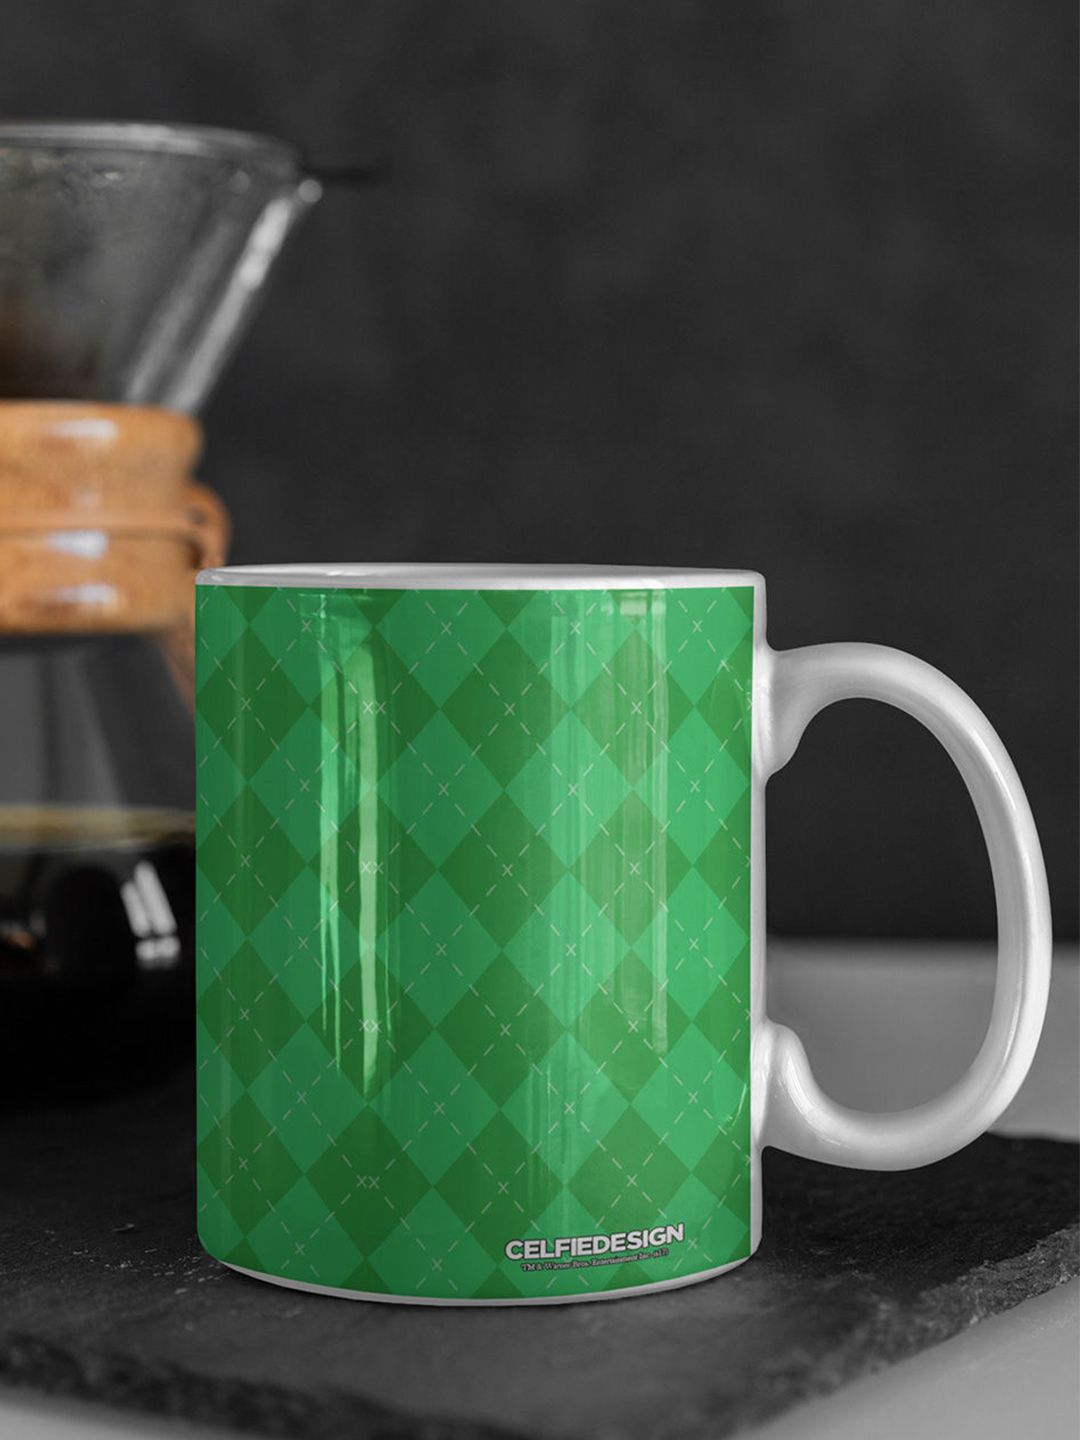 macmerise Green & White Printed Ceramic Glossy Mug Price in India